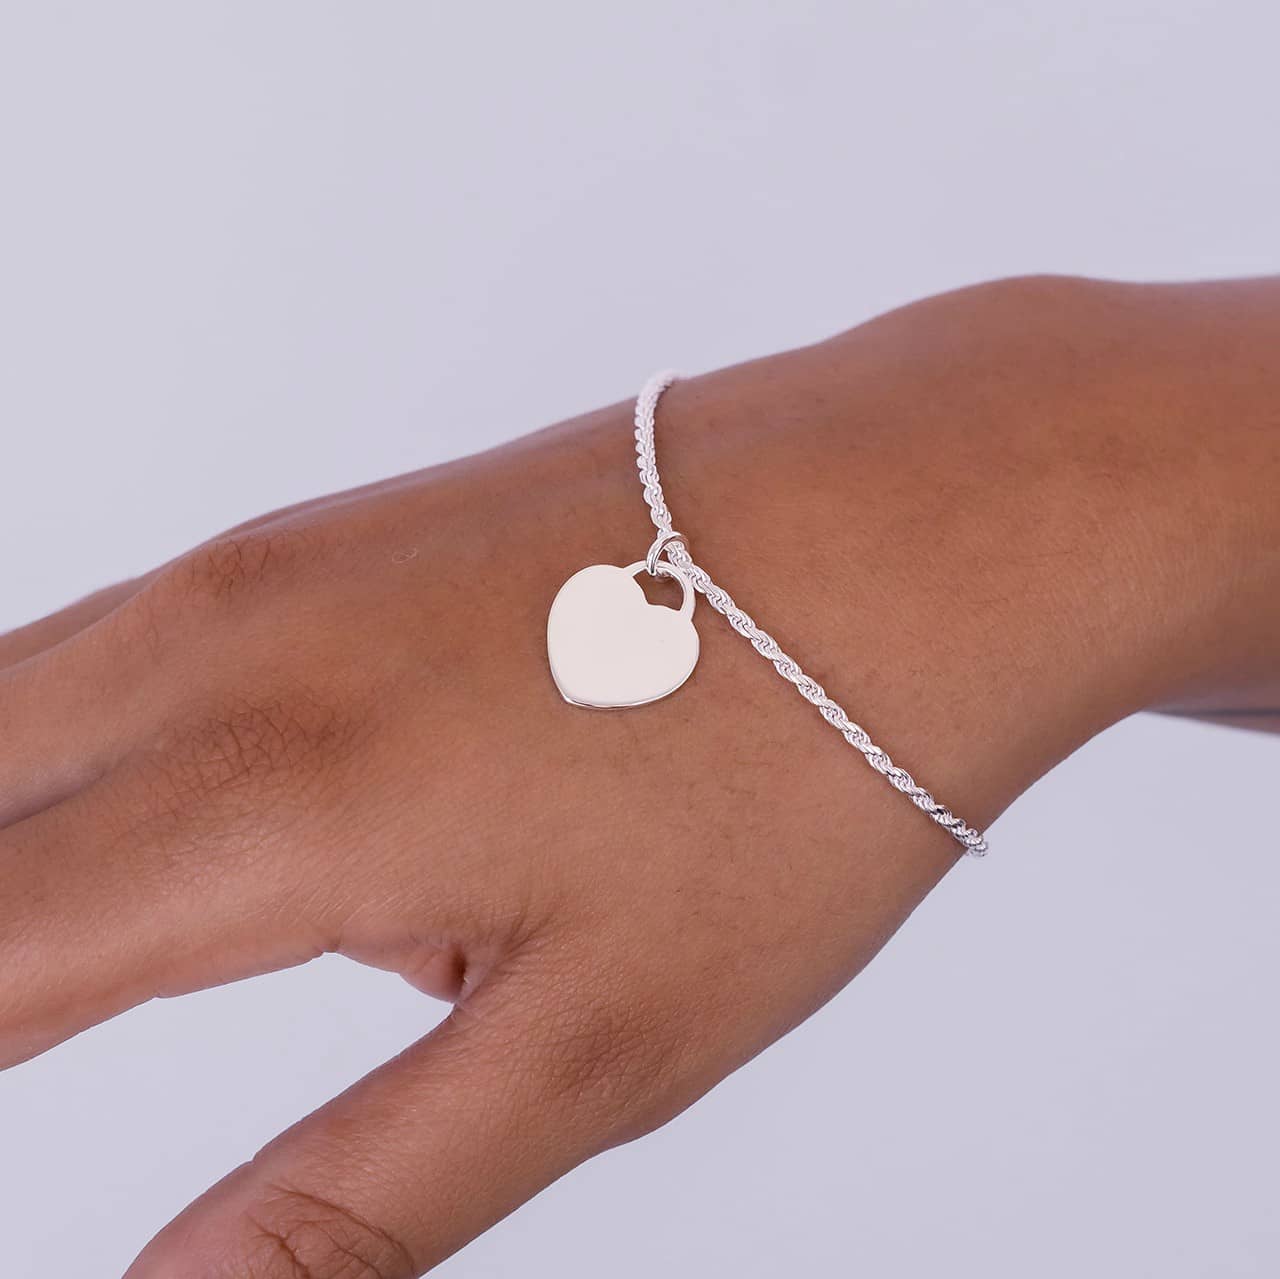 Silver heart tag pendant